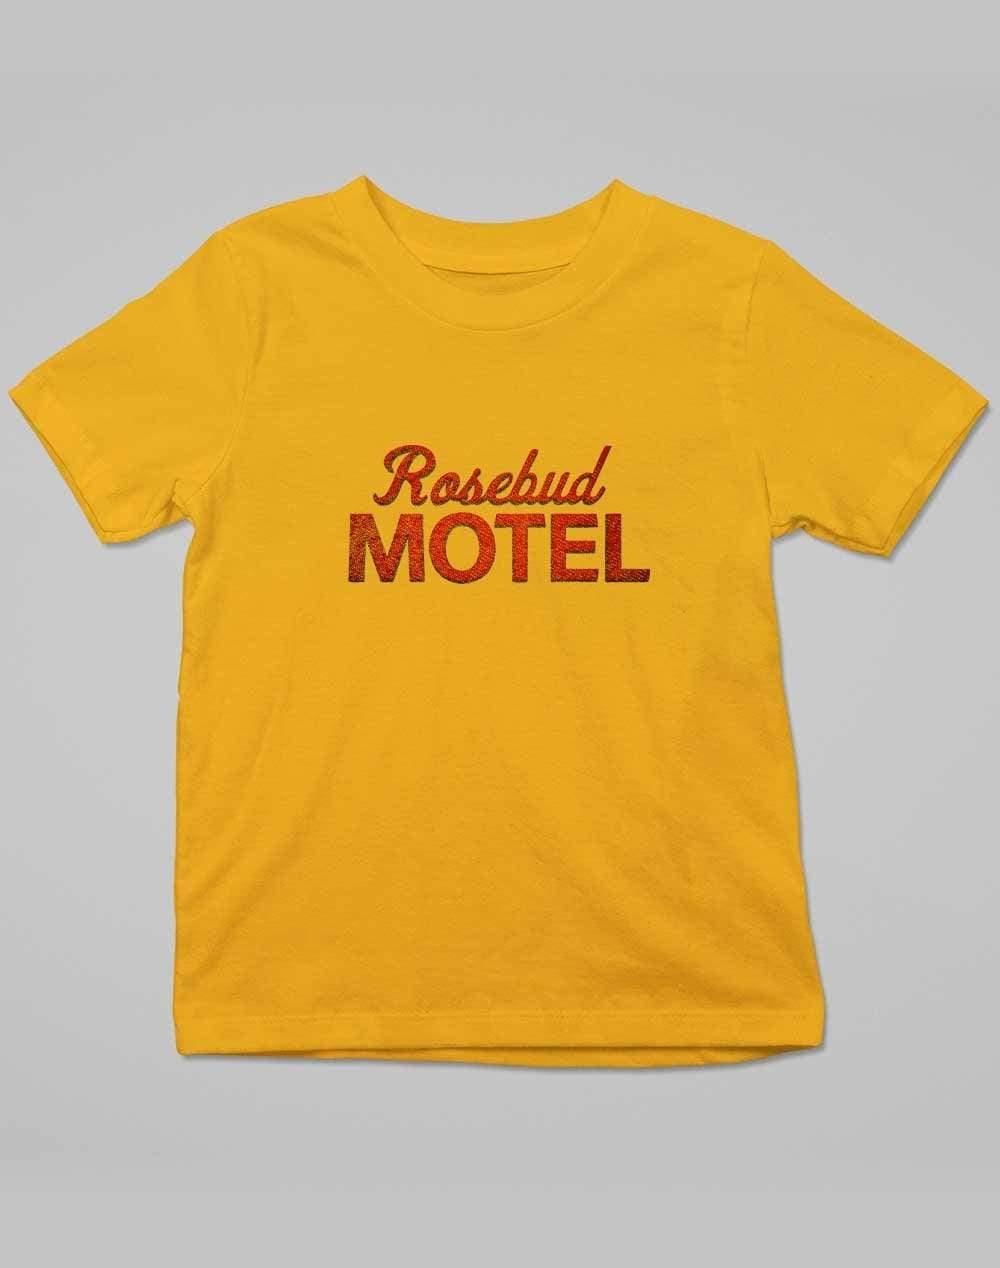 Rosebud Motel Kids T-Shirt 3-4 years / Gold  - Off World Tees